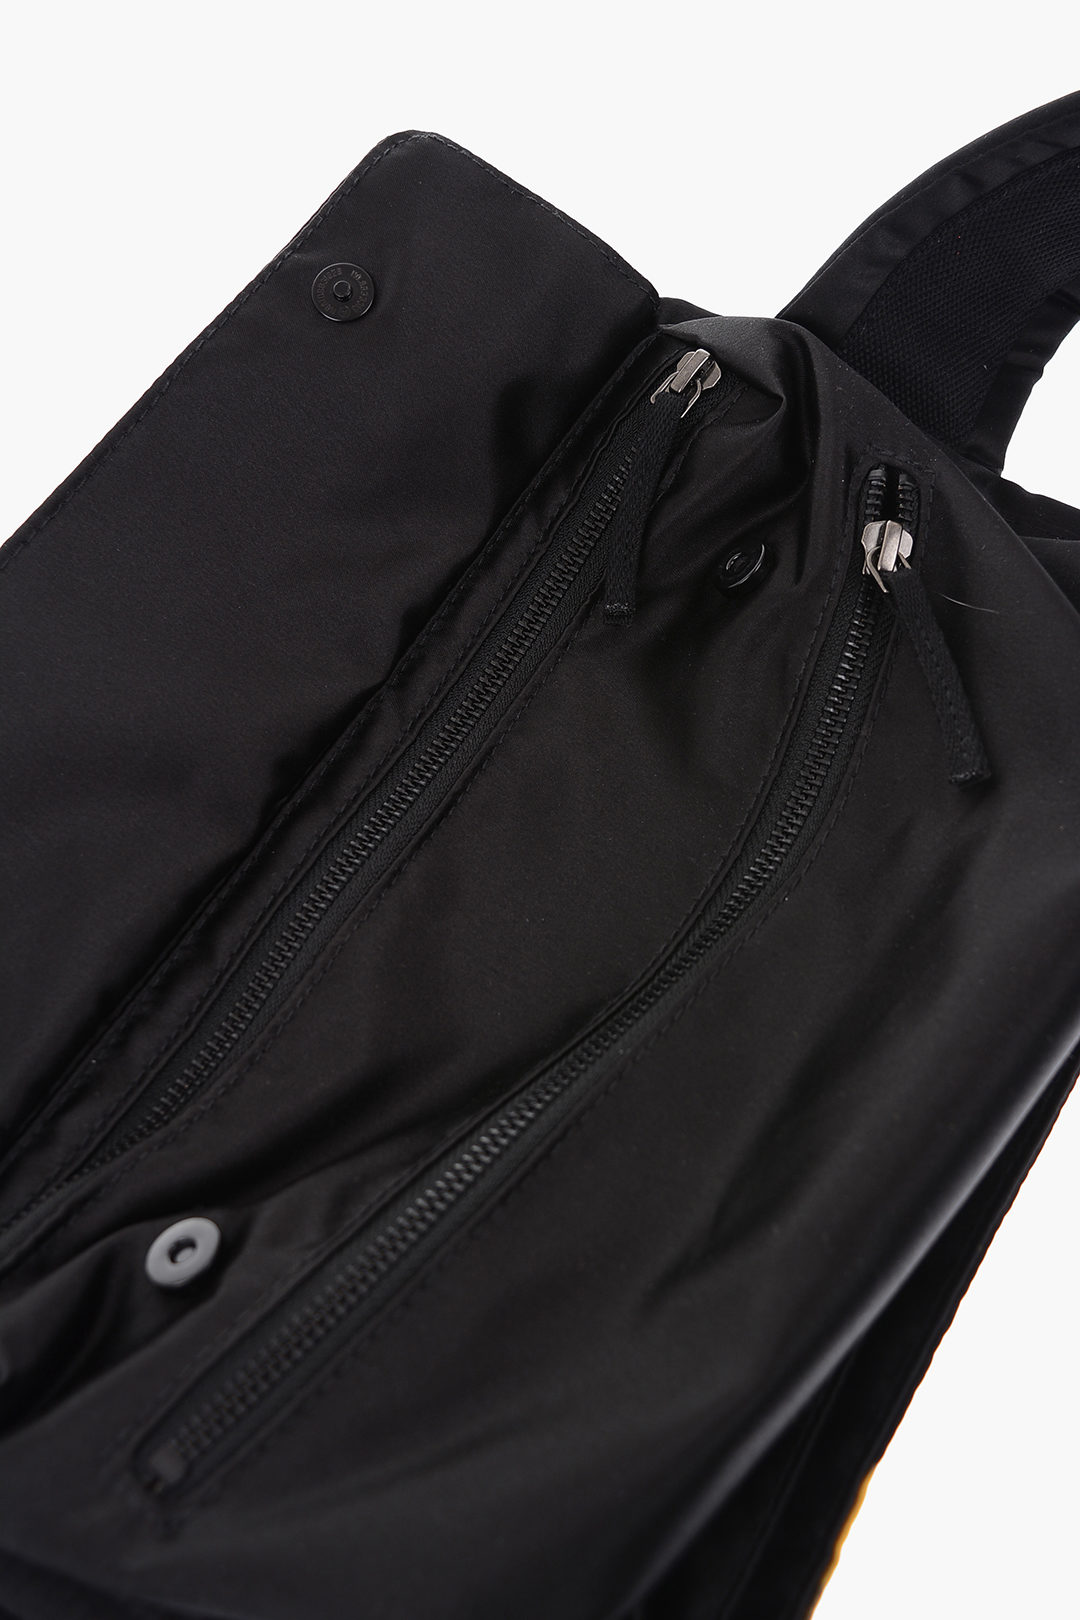 Eastpak RAF SIMONS fabric POSTER waist bag unisex men women - Glamood Outlet